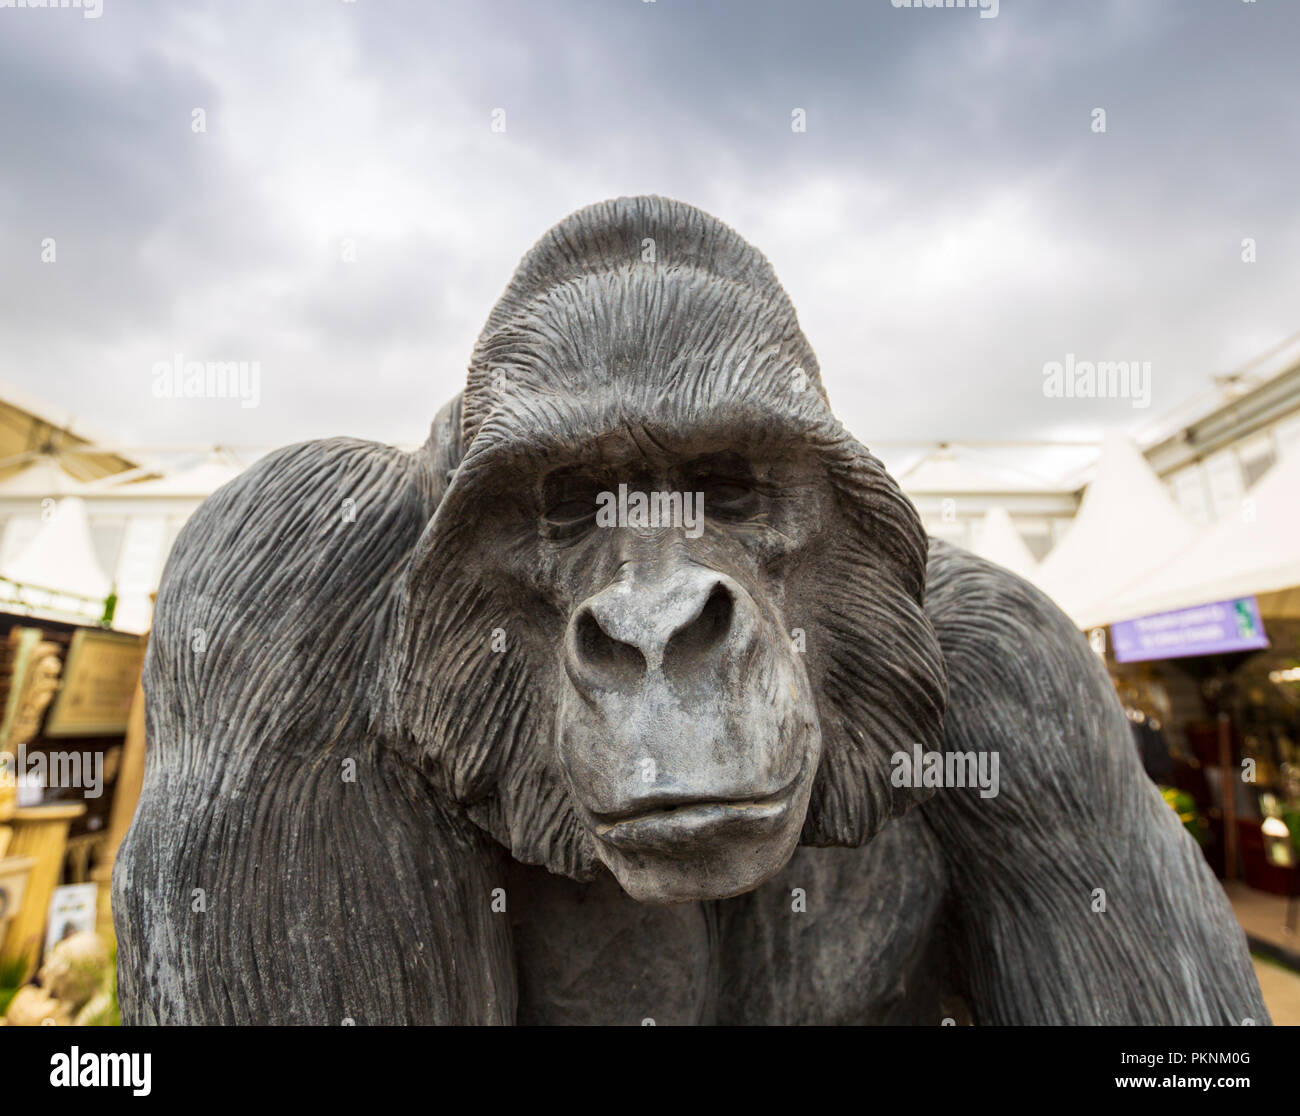 https://c8.alamy.com/comp/PKNM0G/lifesize-gorilla-sculpture-for-sale-at-the-chelsea-flower-show-london-PKNM0G.jpg